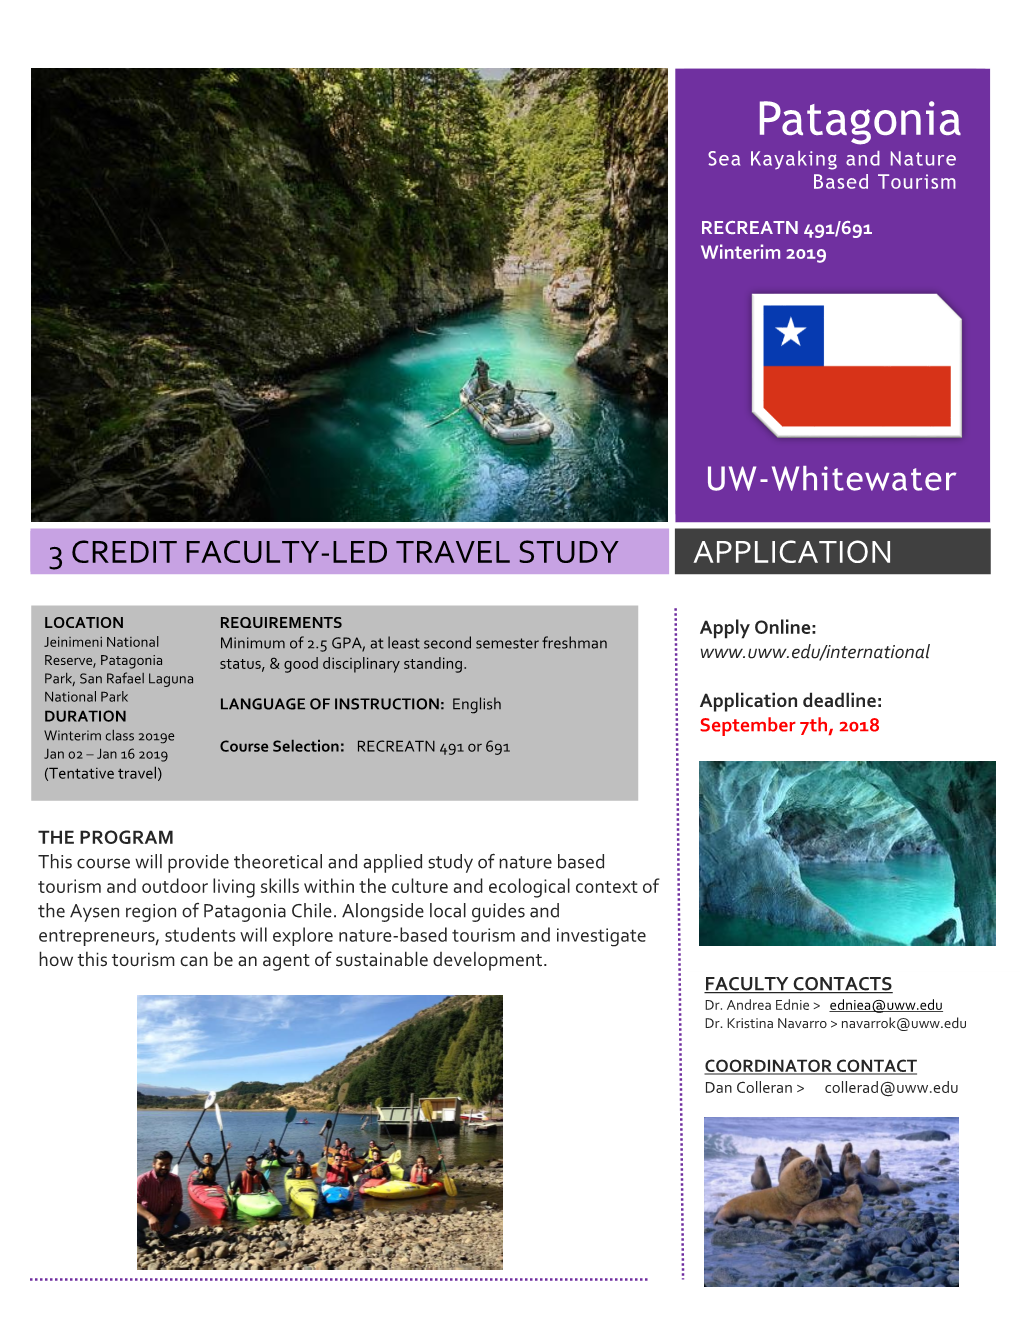 Patagonia Sea Kayaking and Nature Based Tourism